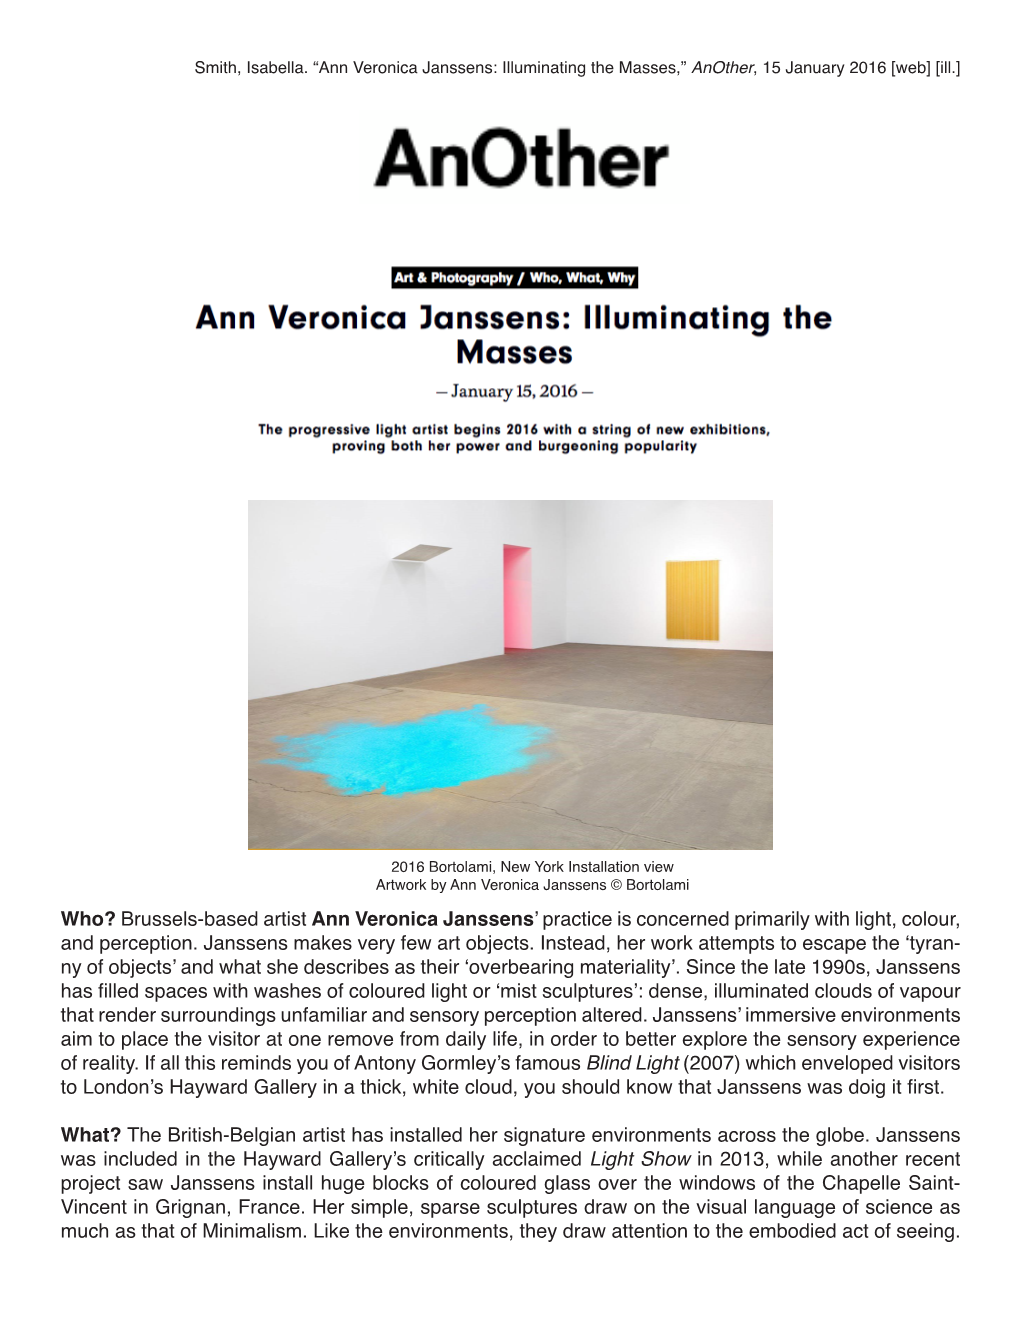 Who? Brussels-Based Artist Ann Veronica Janssens' Practice Is